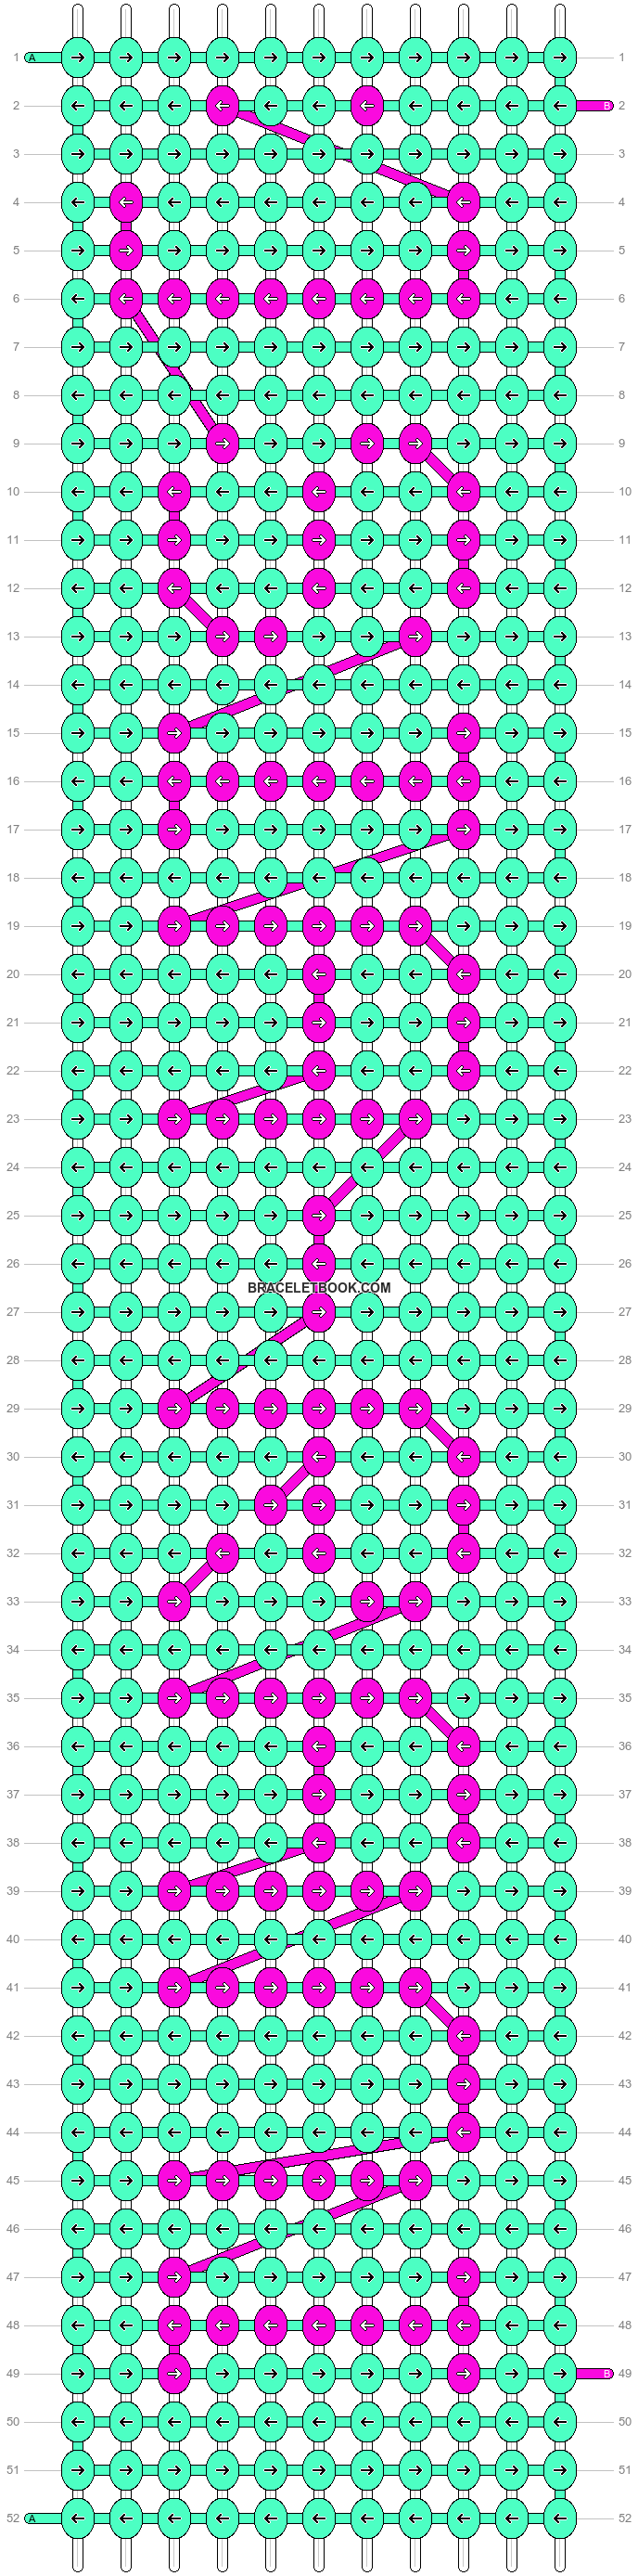 Alpha pattern #4330 pattern